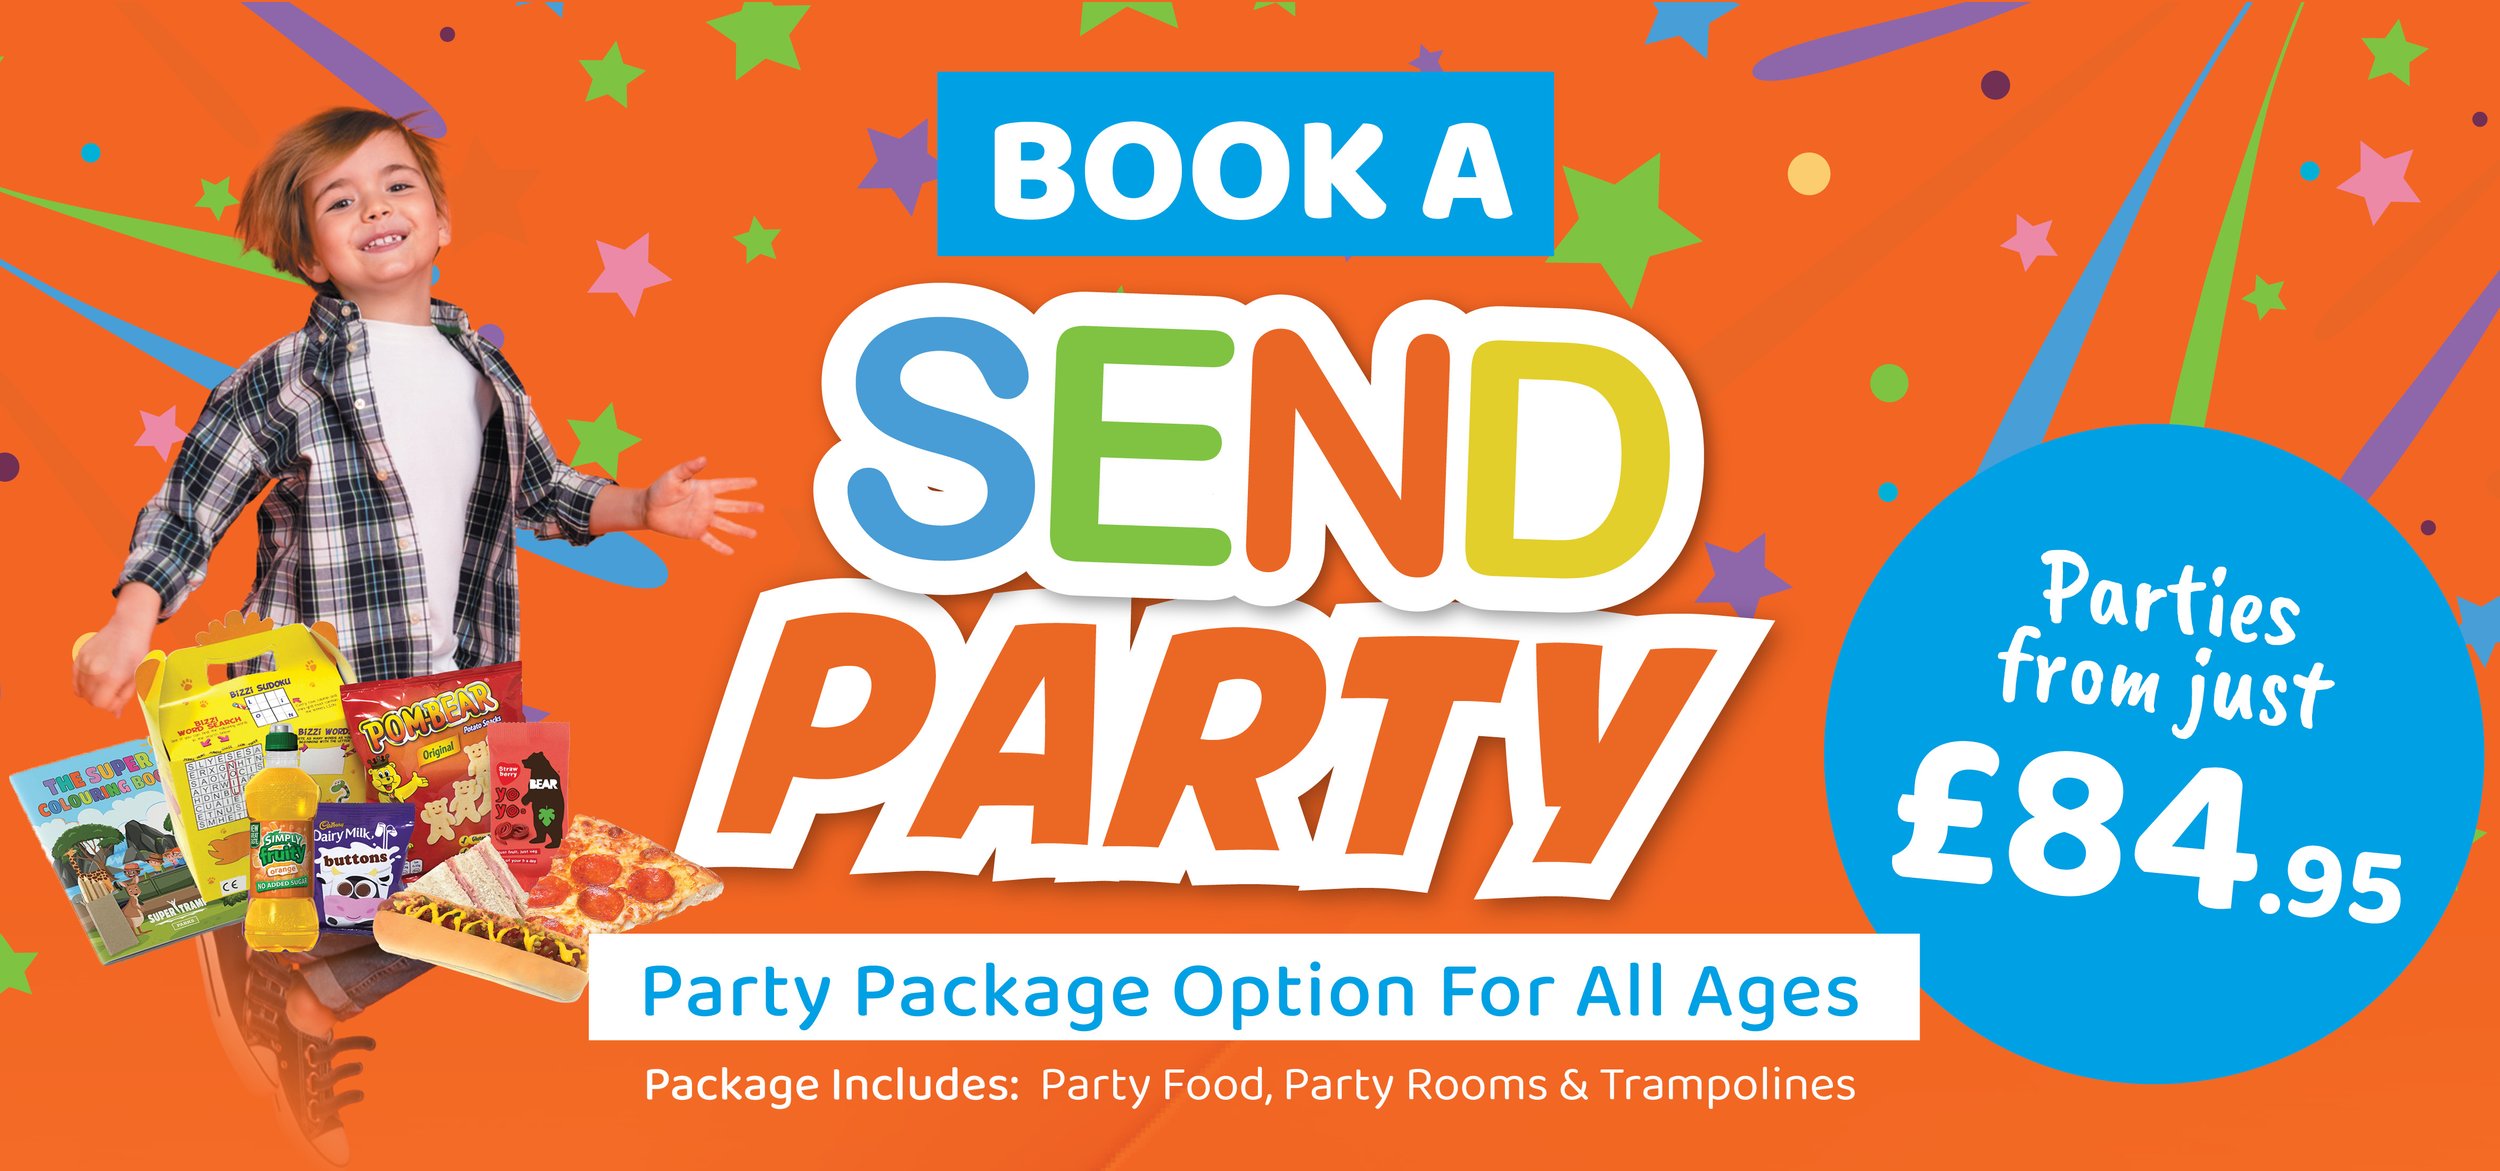 Book A SEND Party - Website Banners.jpg